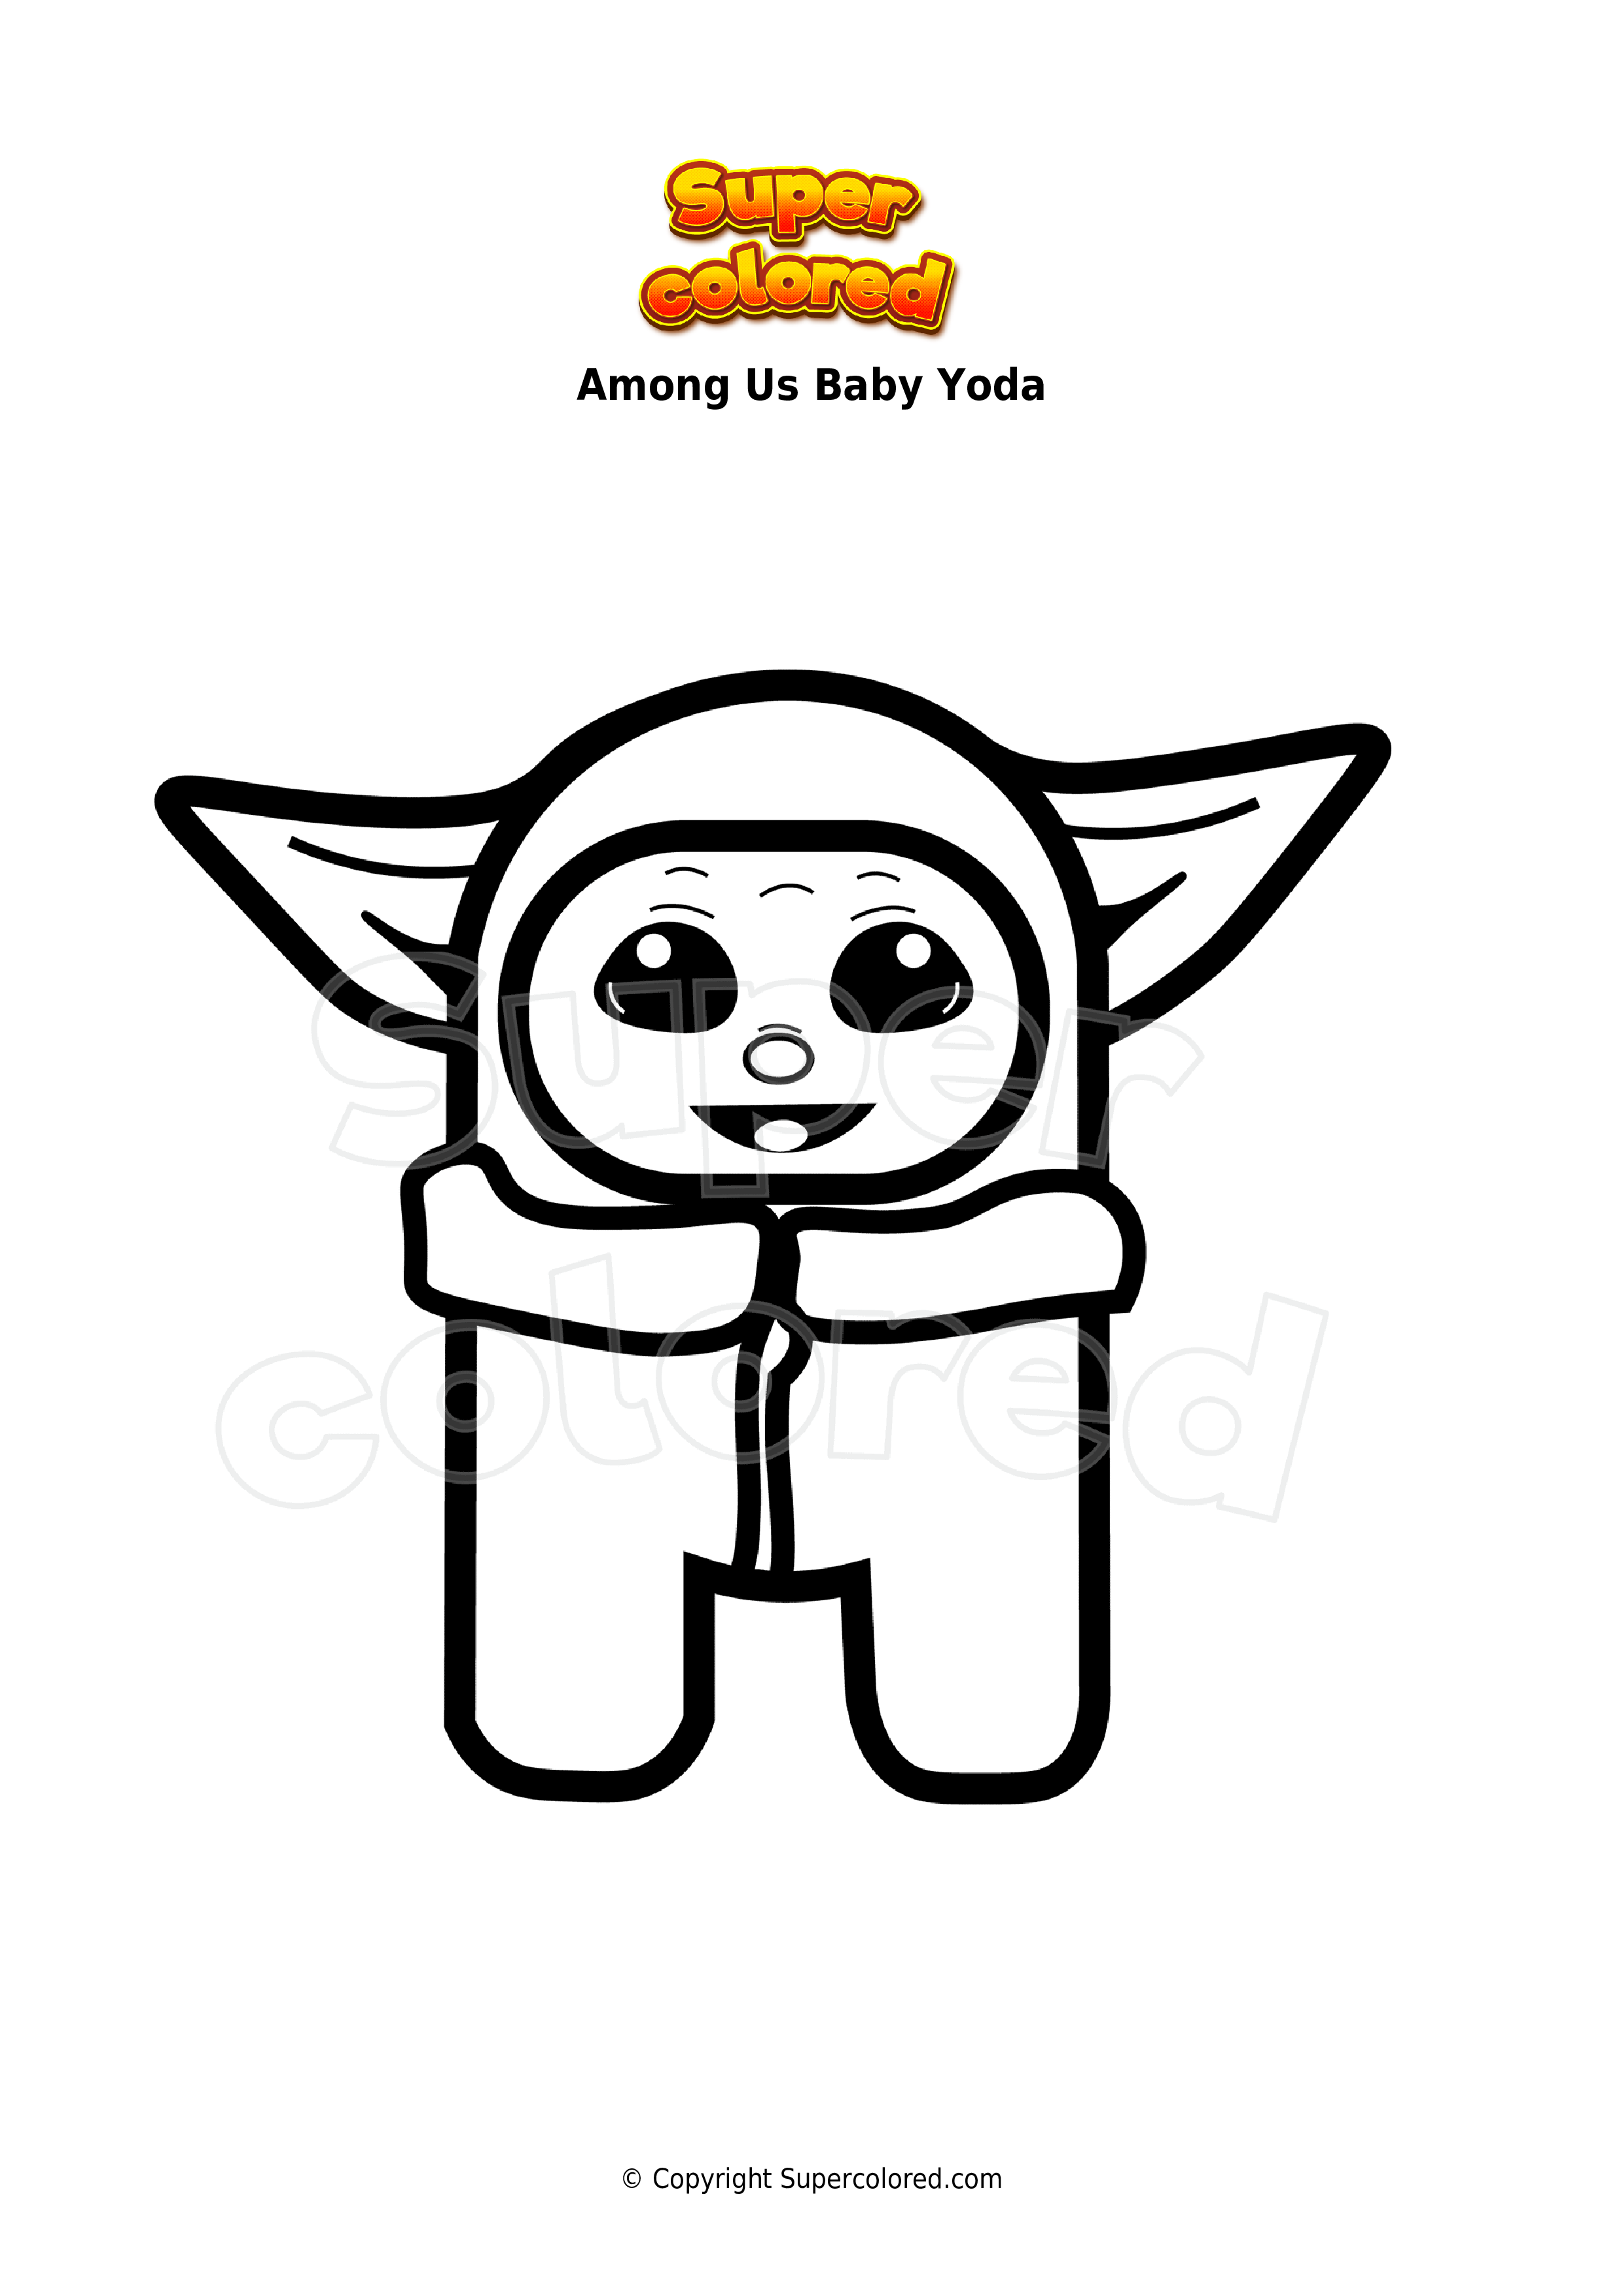 Coloring page Among Us Baby Yoda   Supercolored.com